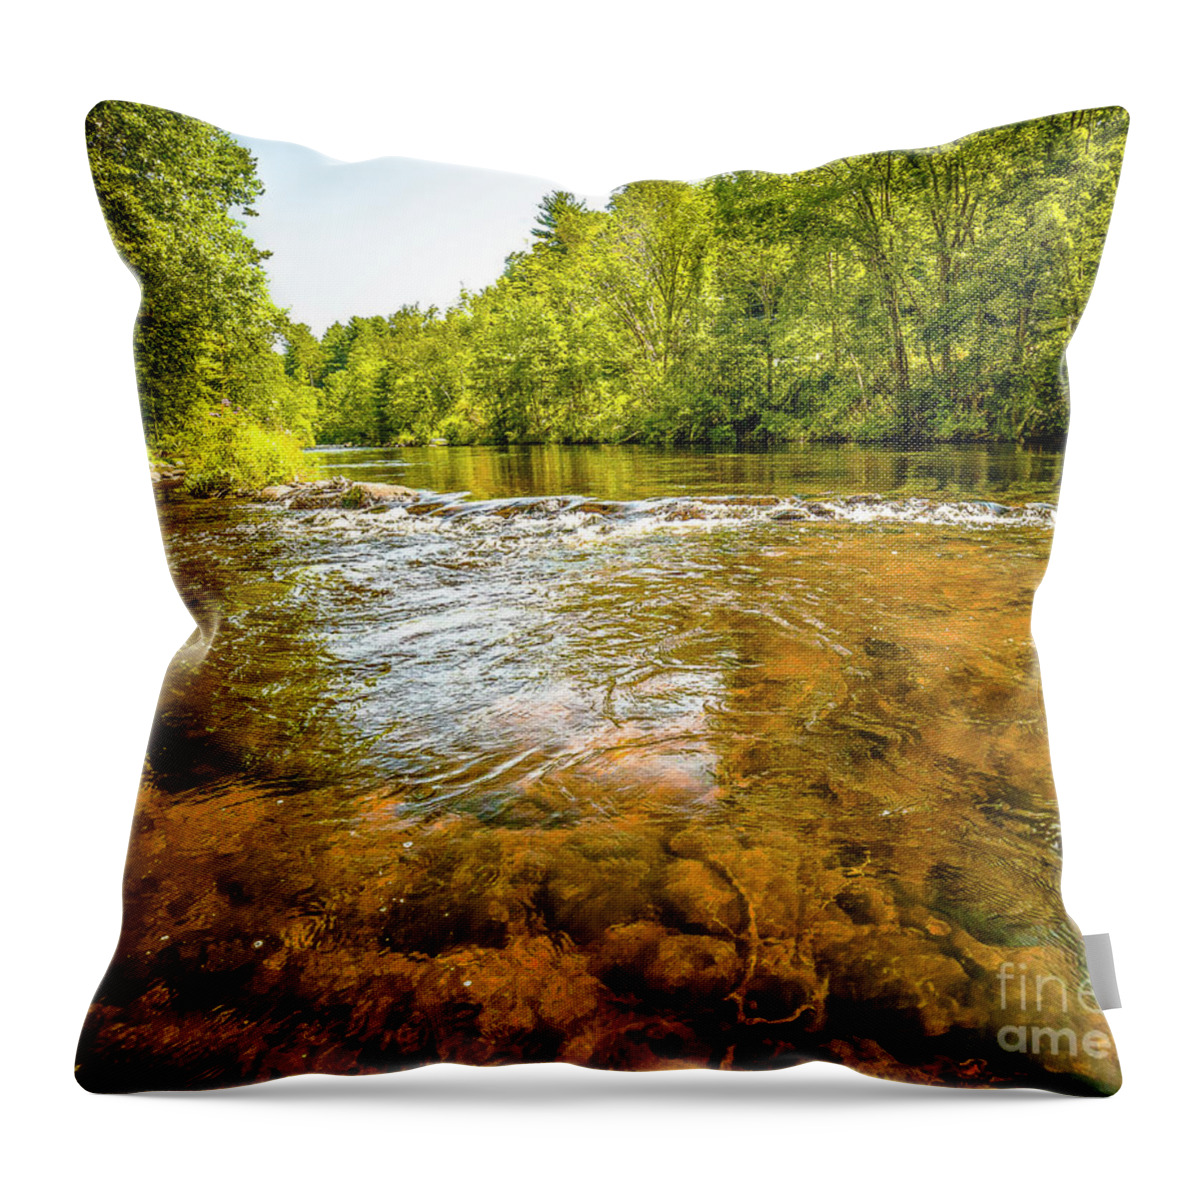 Farmingtion River Throw Pillow featuring the photograph Vans Pool on the Farmington by Tom Cameron